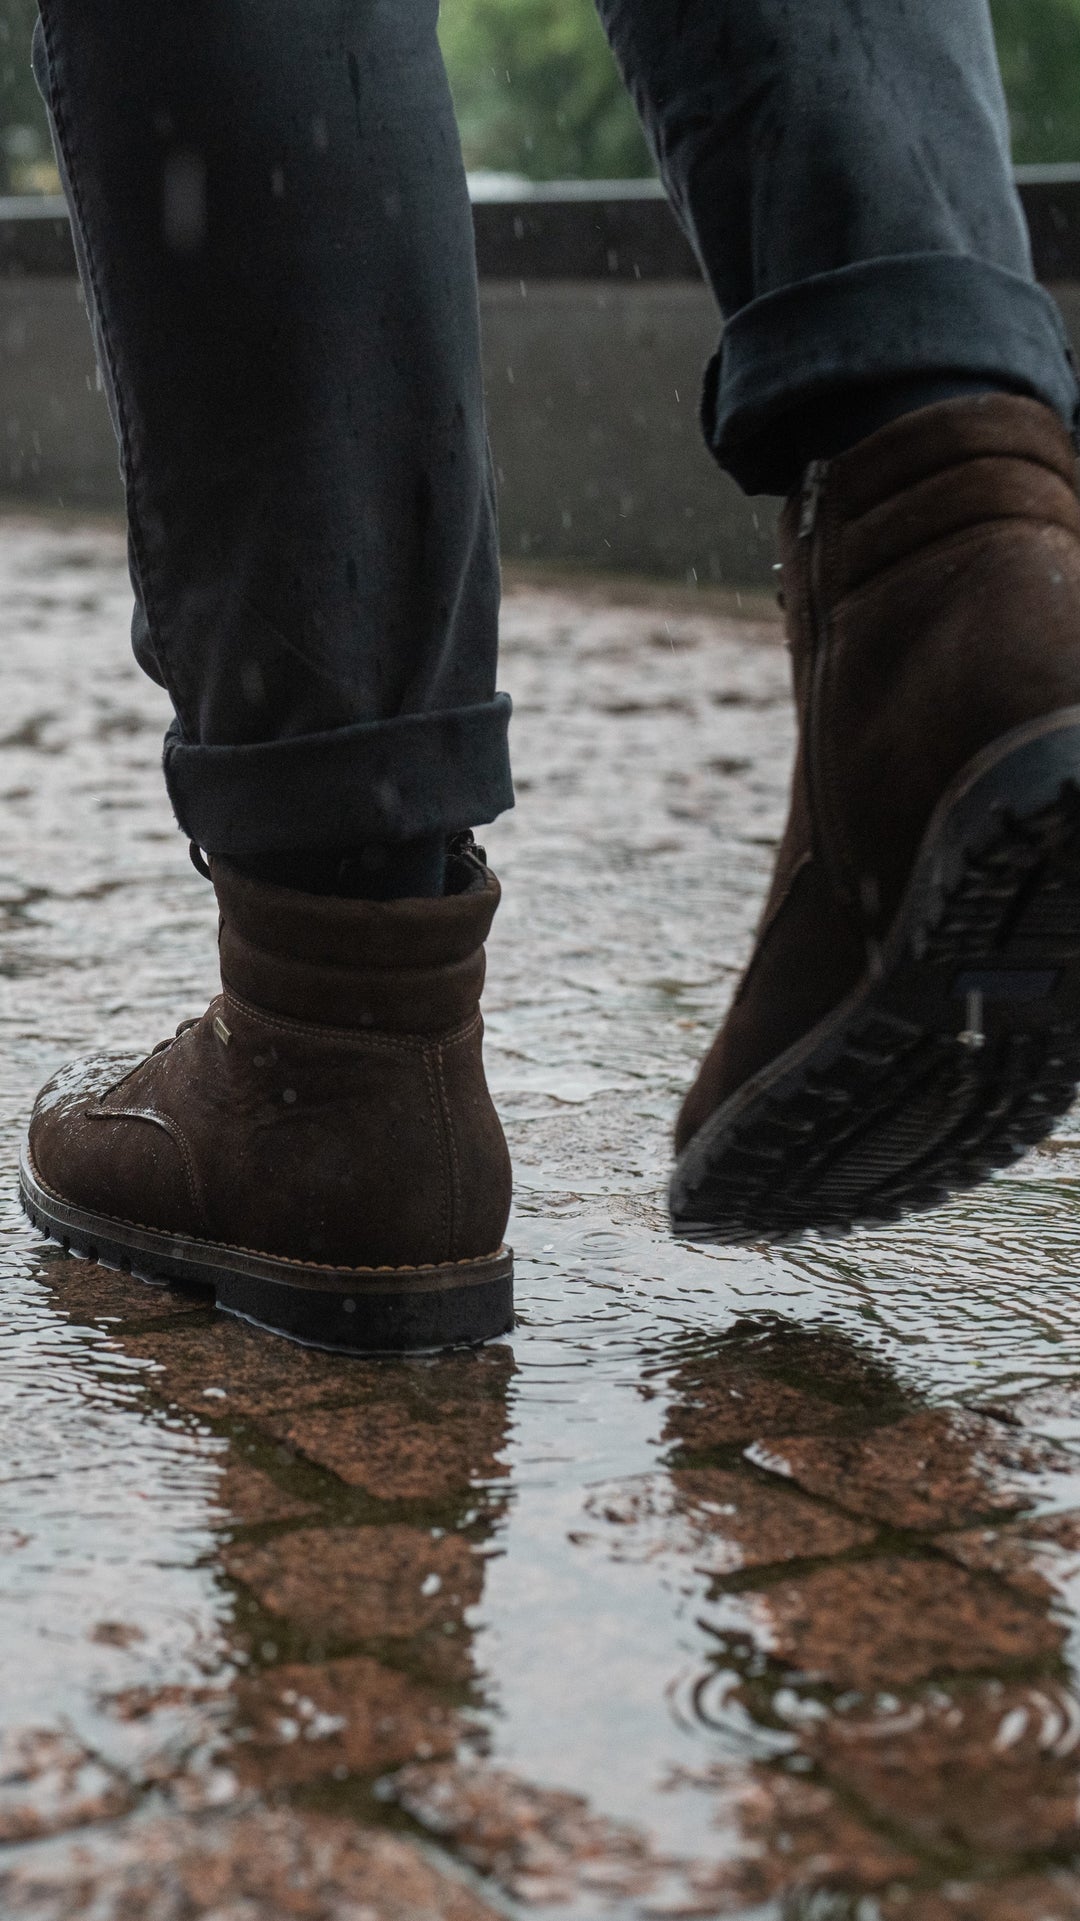 OLOS Men's GORE-TEX® ankle boots